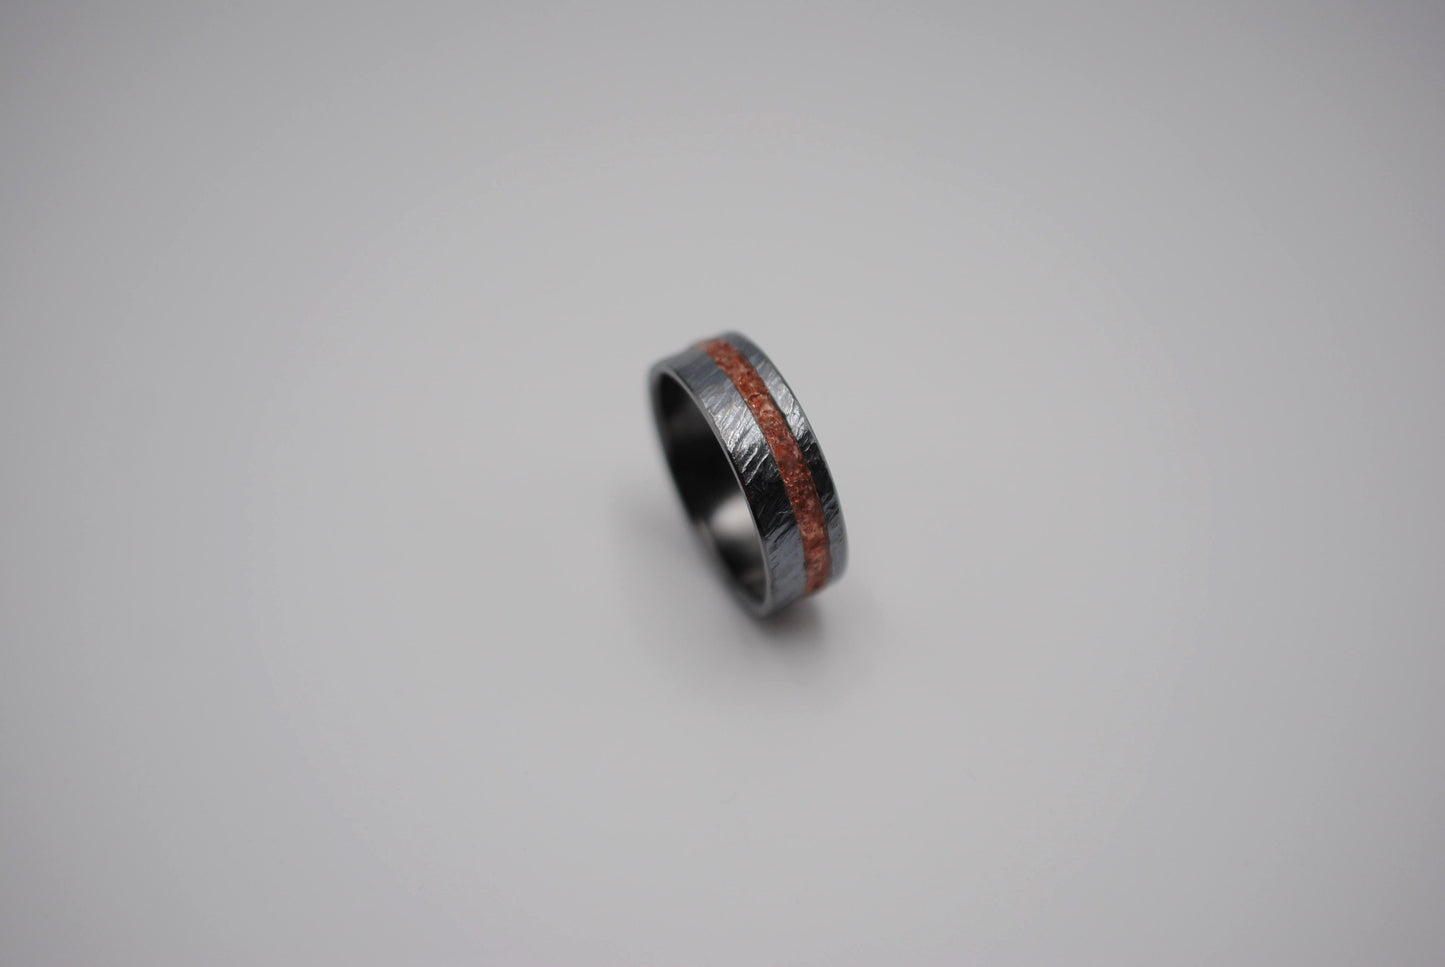 Ring Band: Garnet Resin Inlay, Bark Texture, Blackened Silver